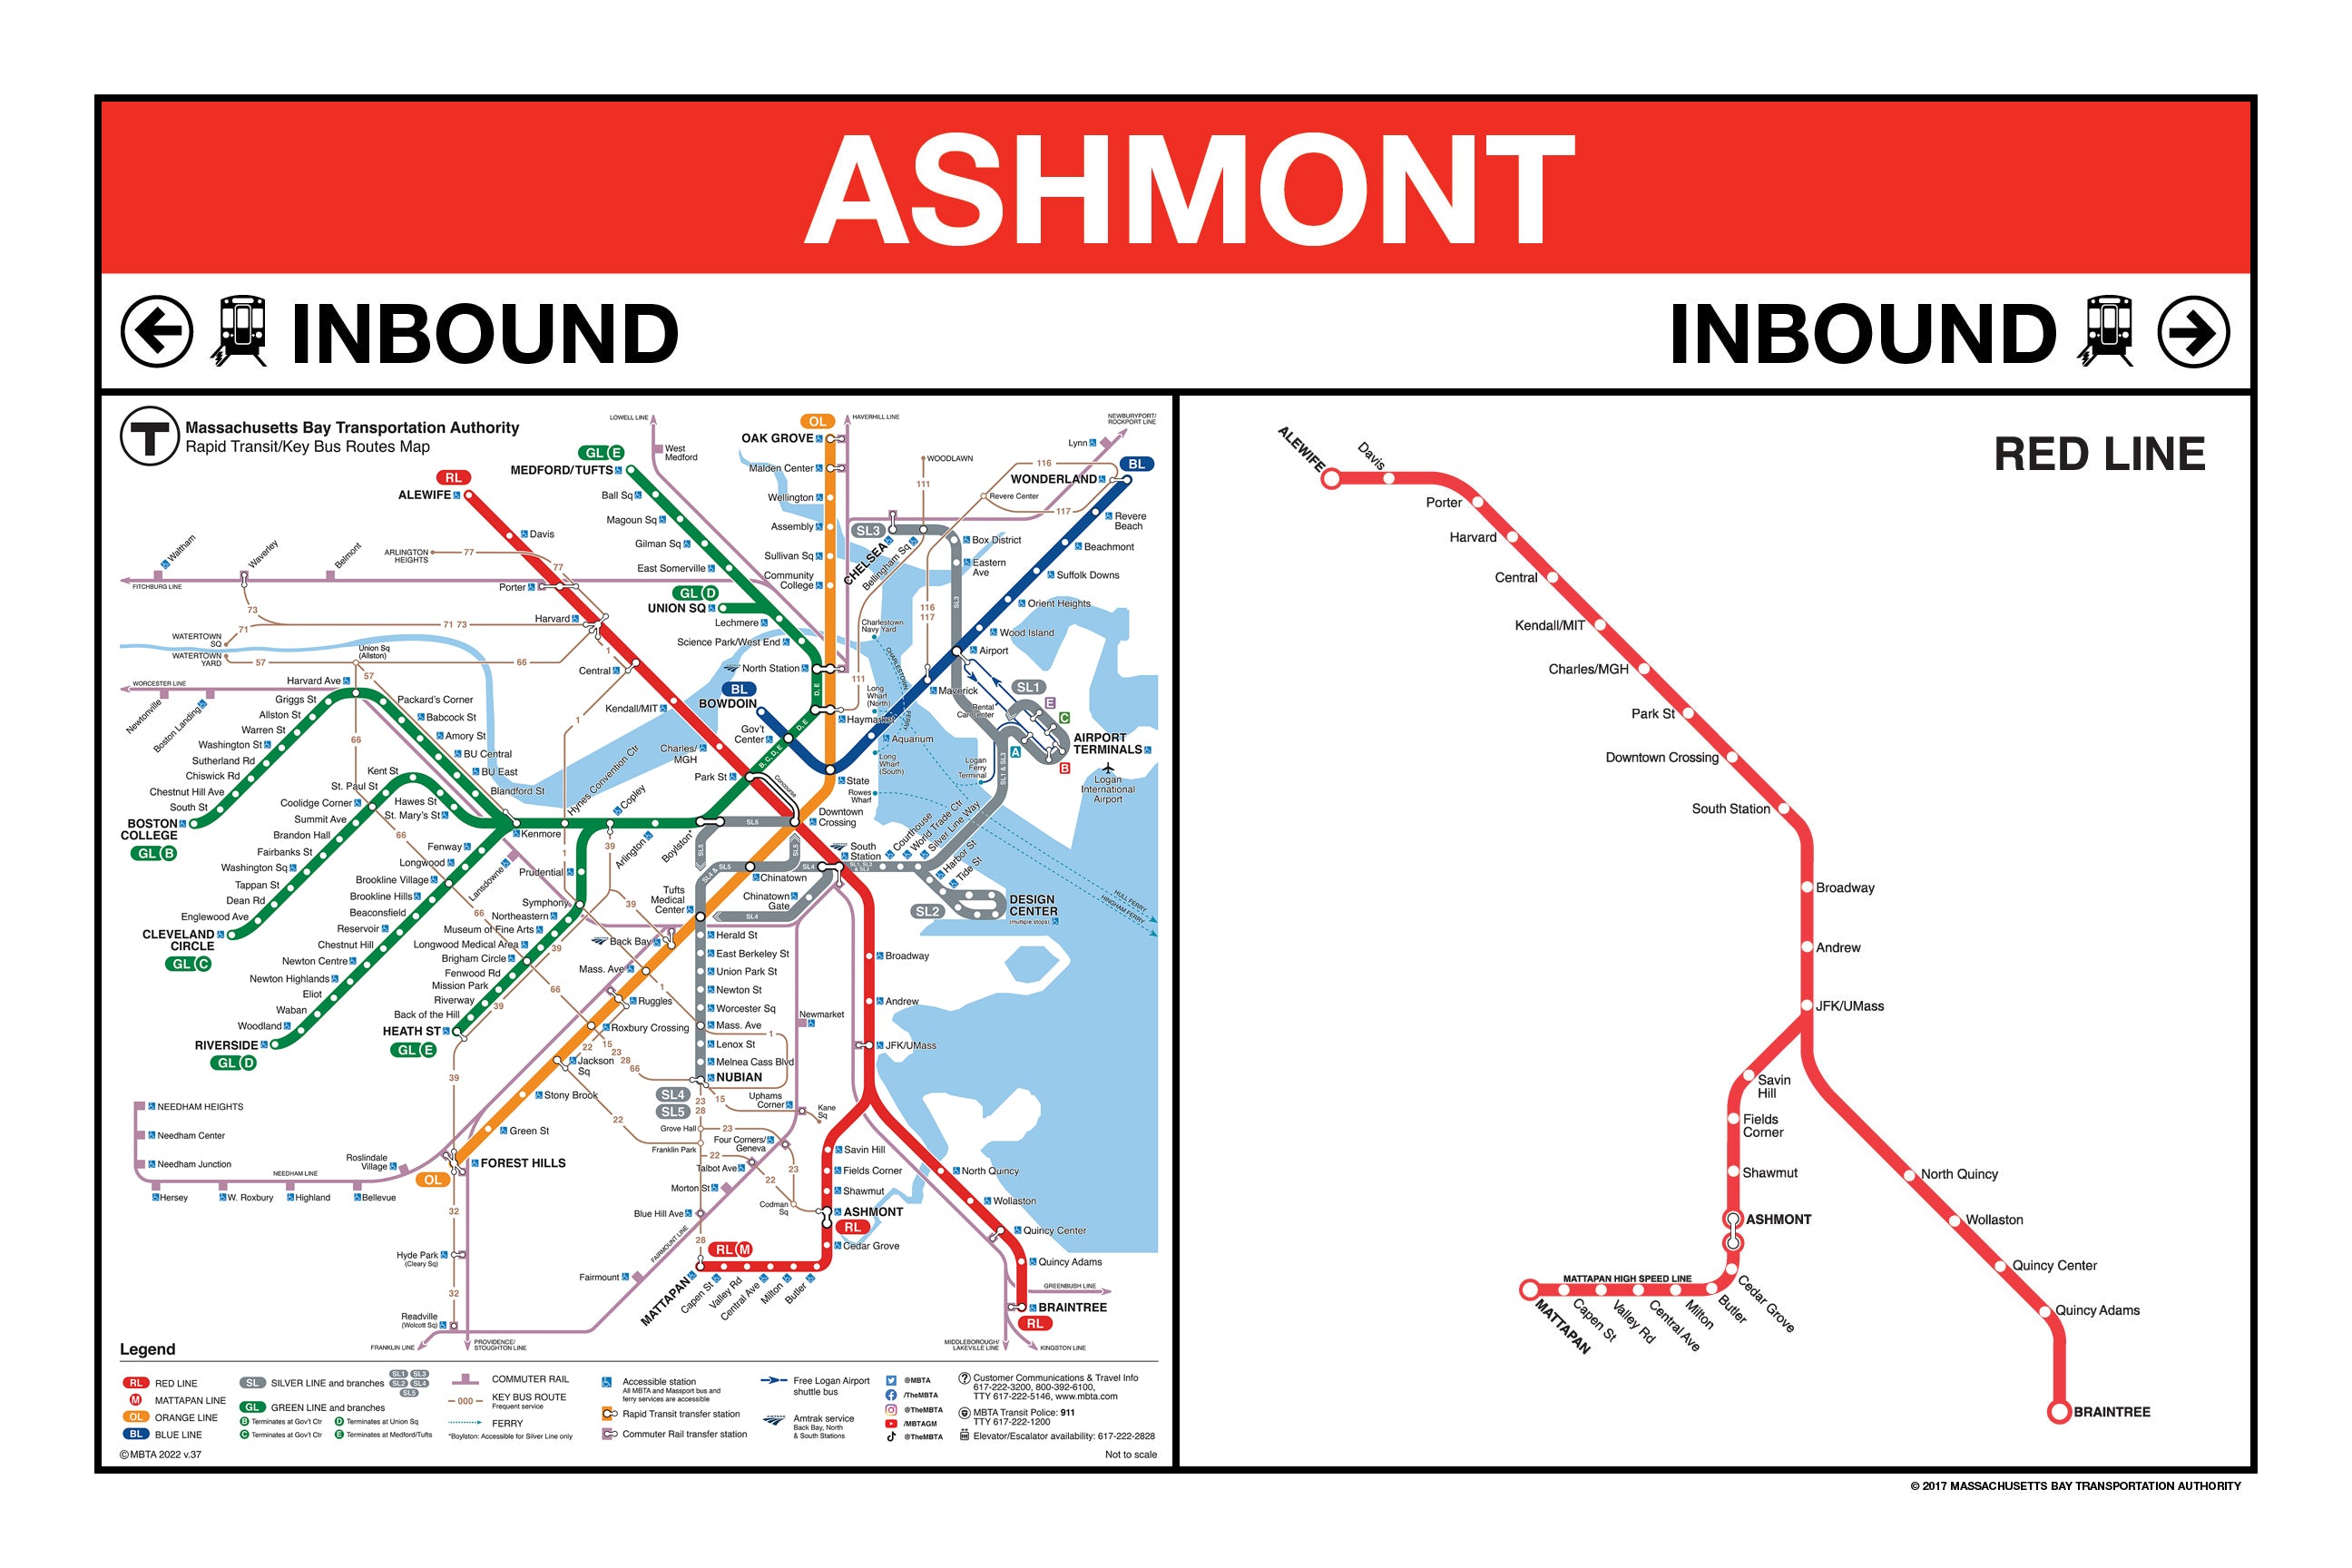 MBTA Red Line Station Panel Prints (18"x24")